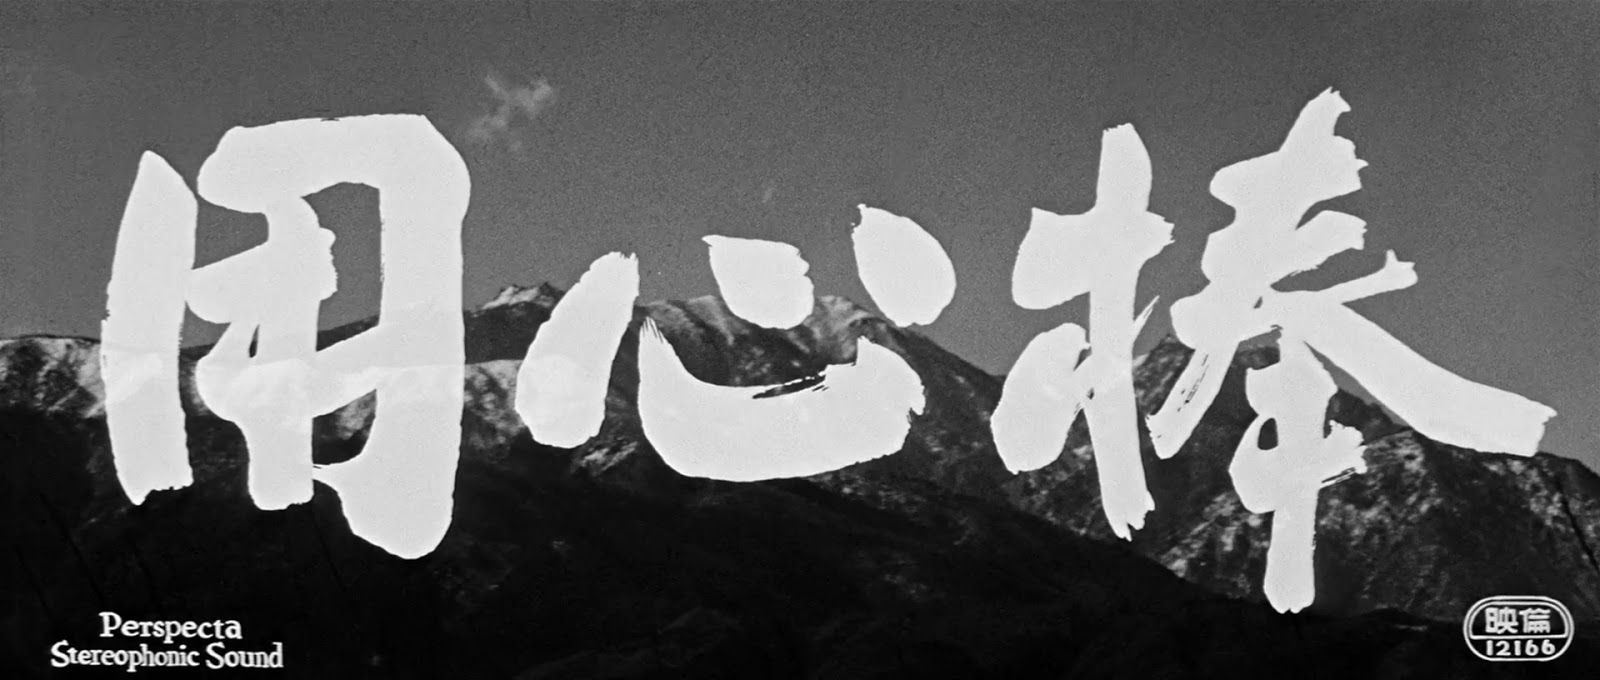 Yojimbo (1961)|1080p|Sub Español|Mega